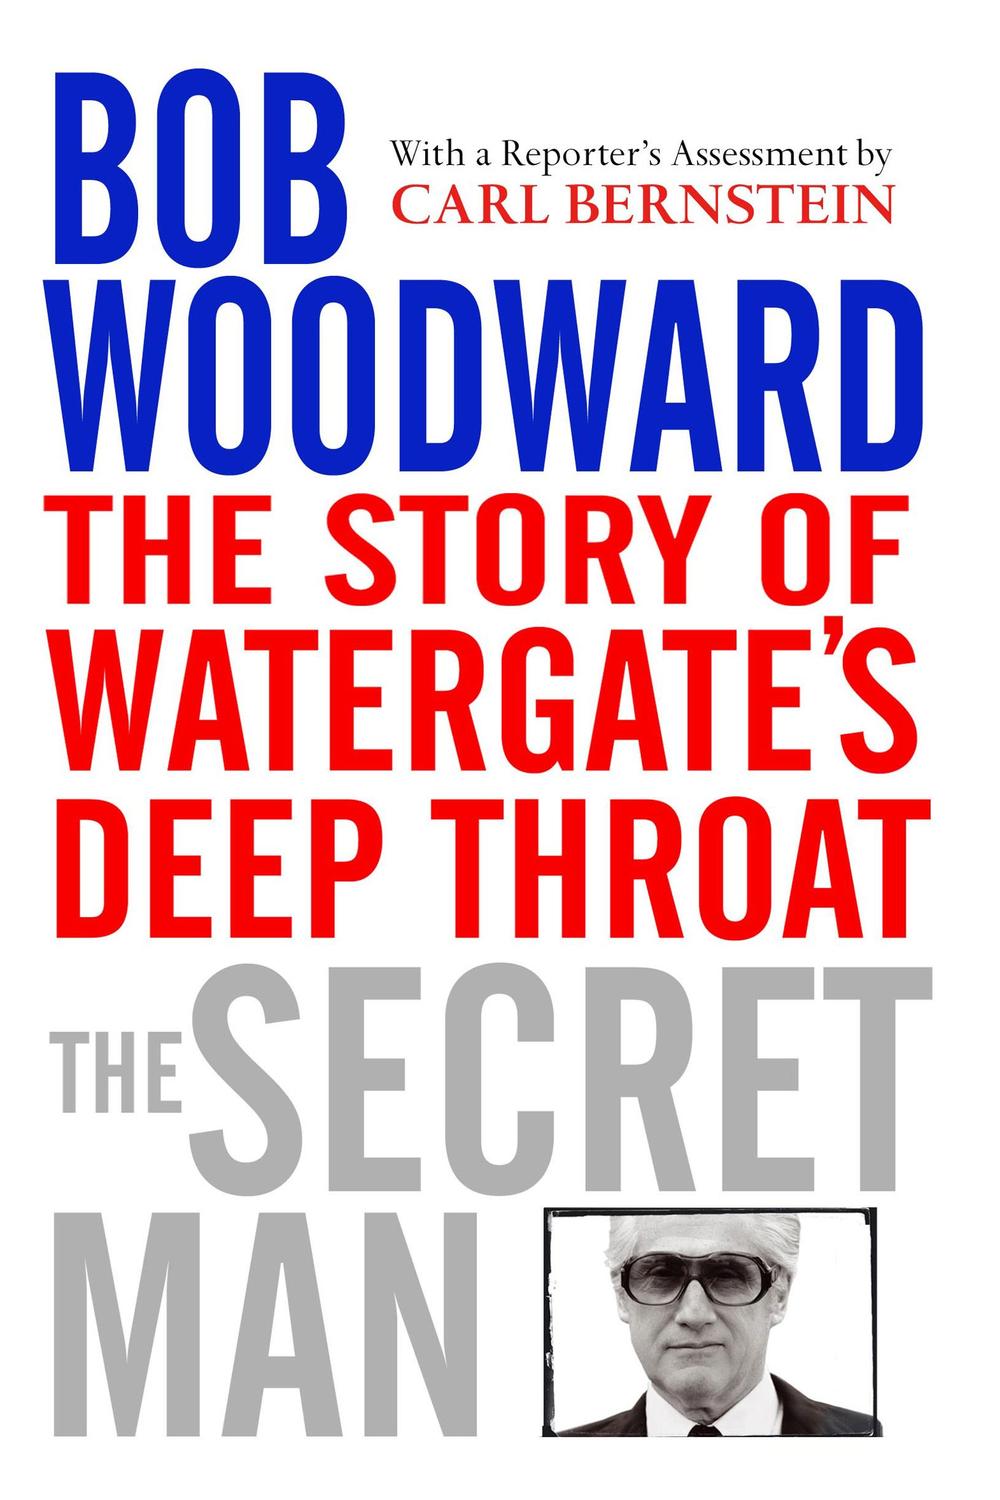 The Secret Man - Bob Woodward